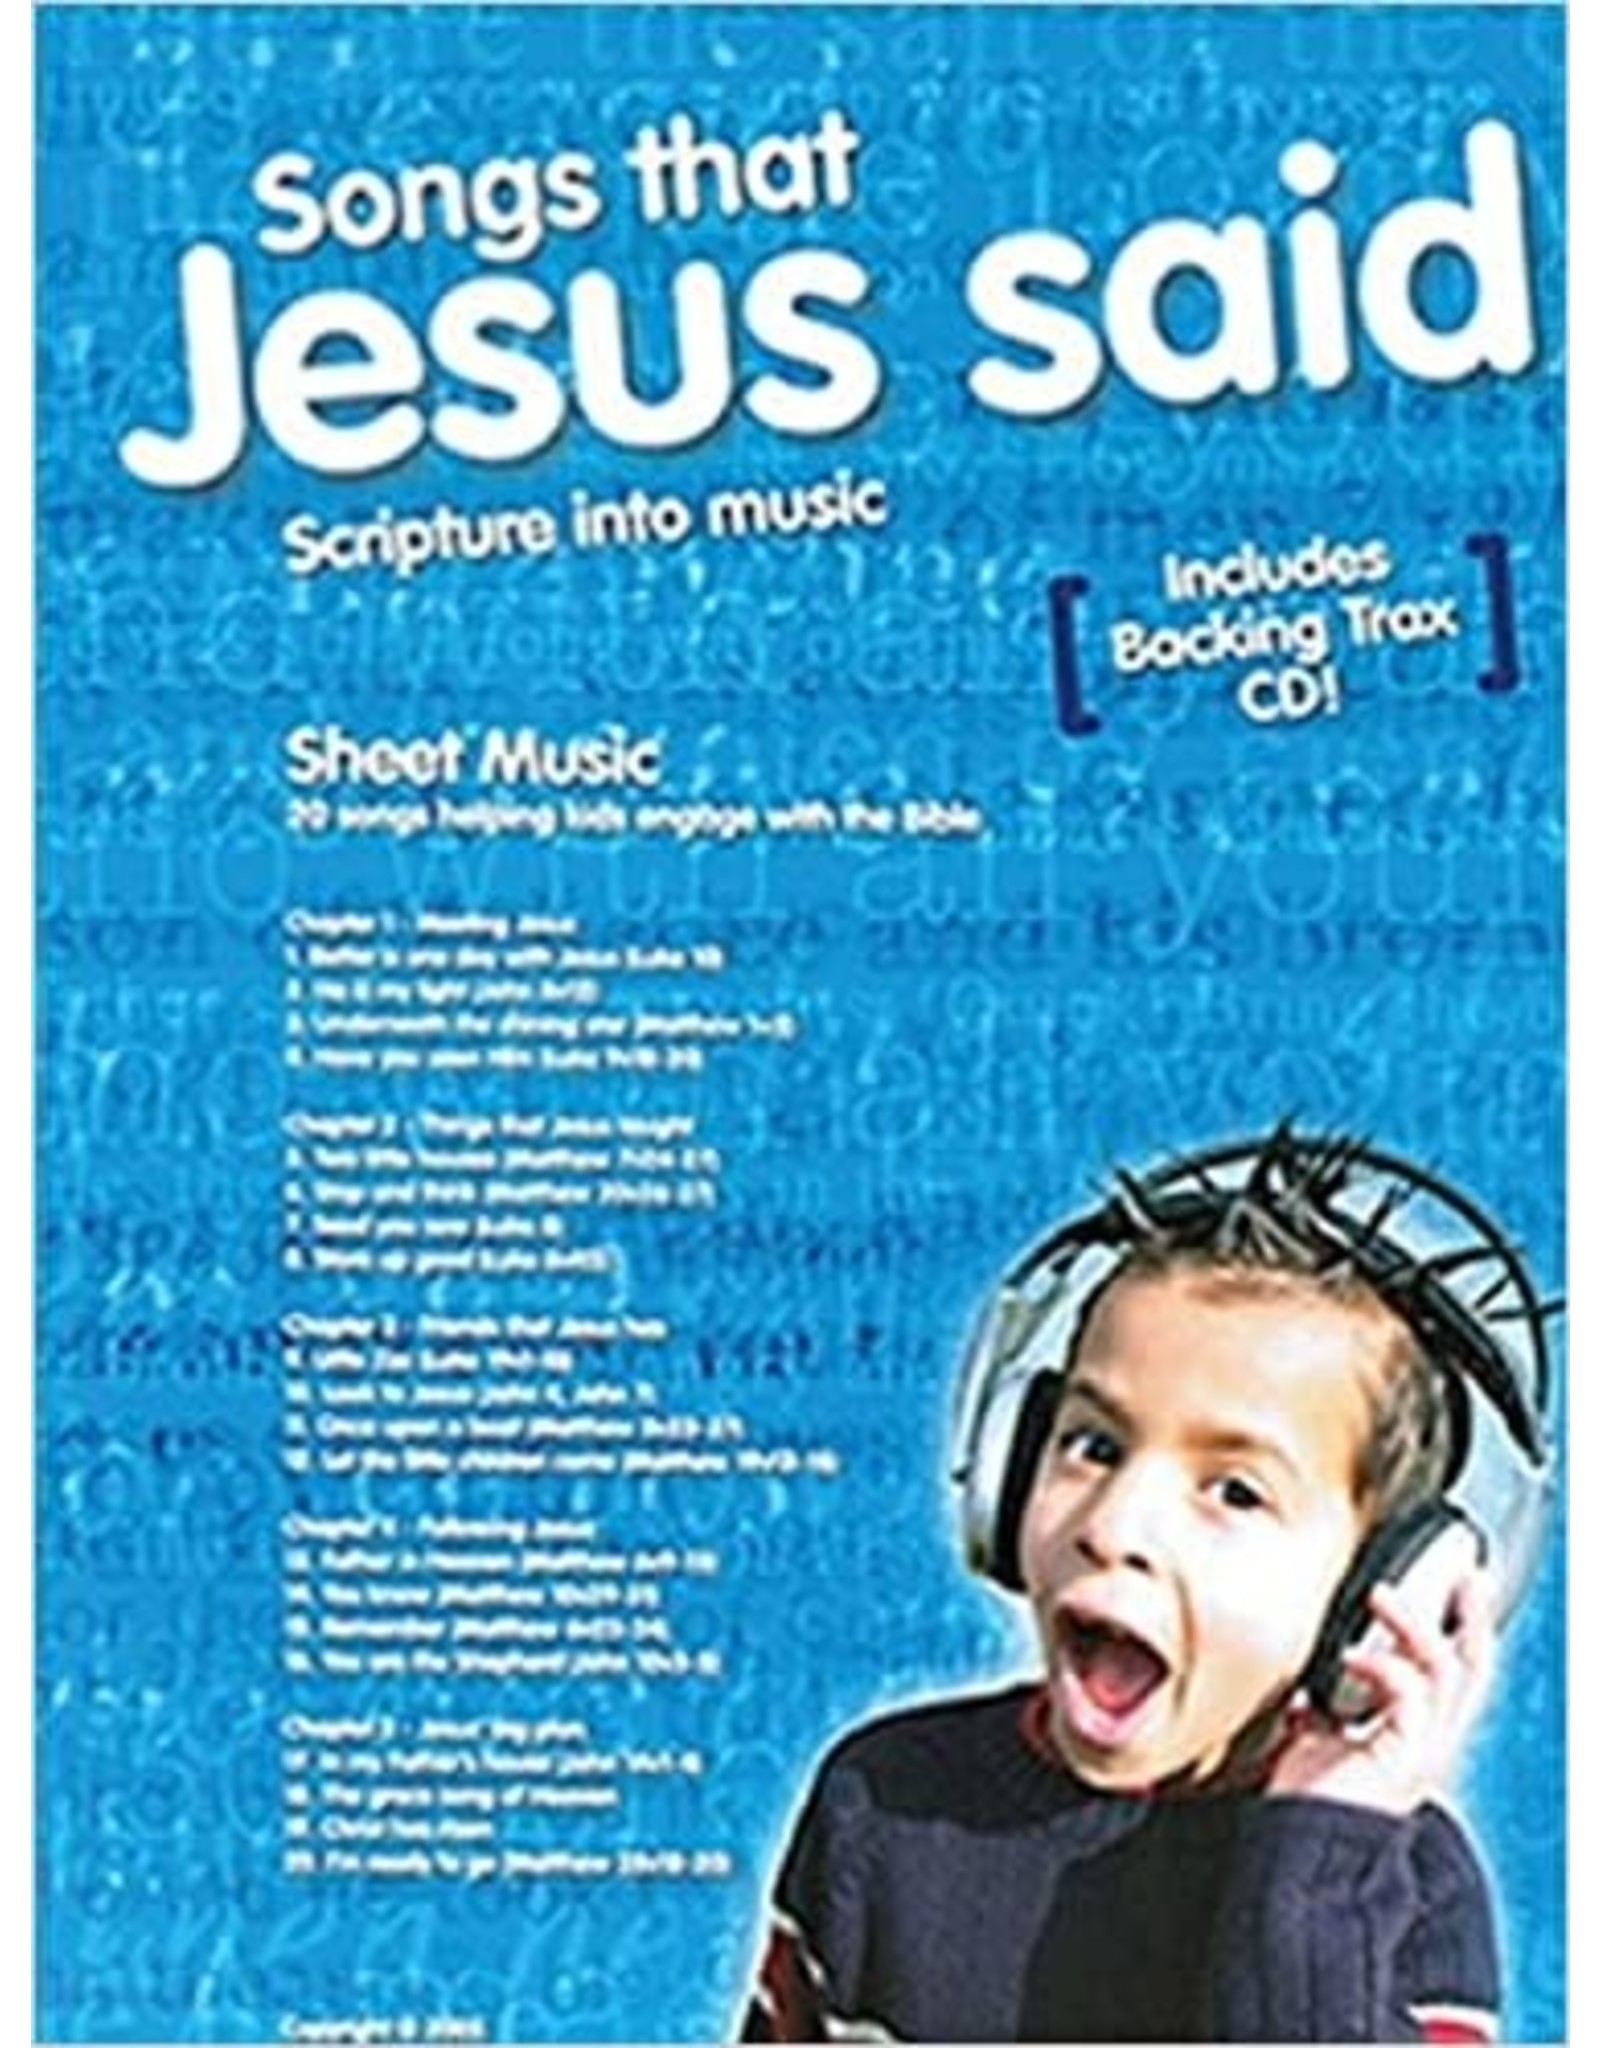 Keith & Kristyn Getty Songs that Jesus Said, Songbook